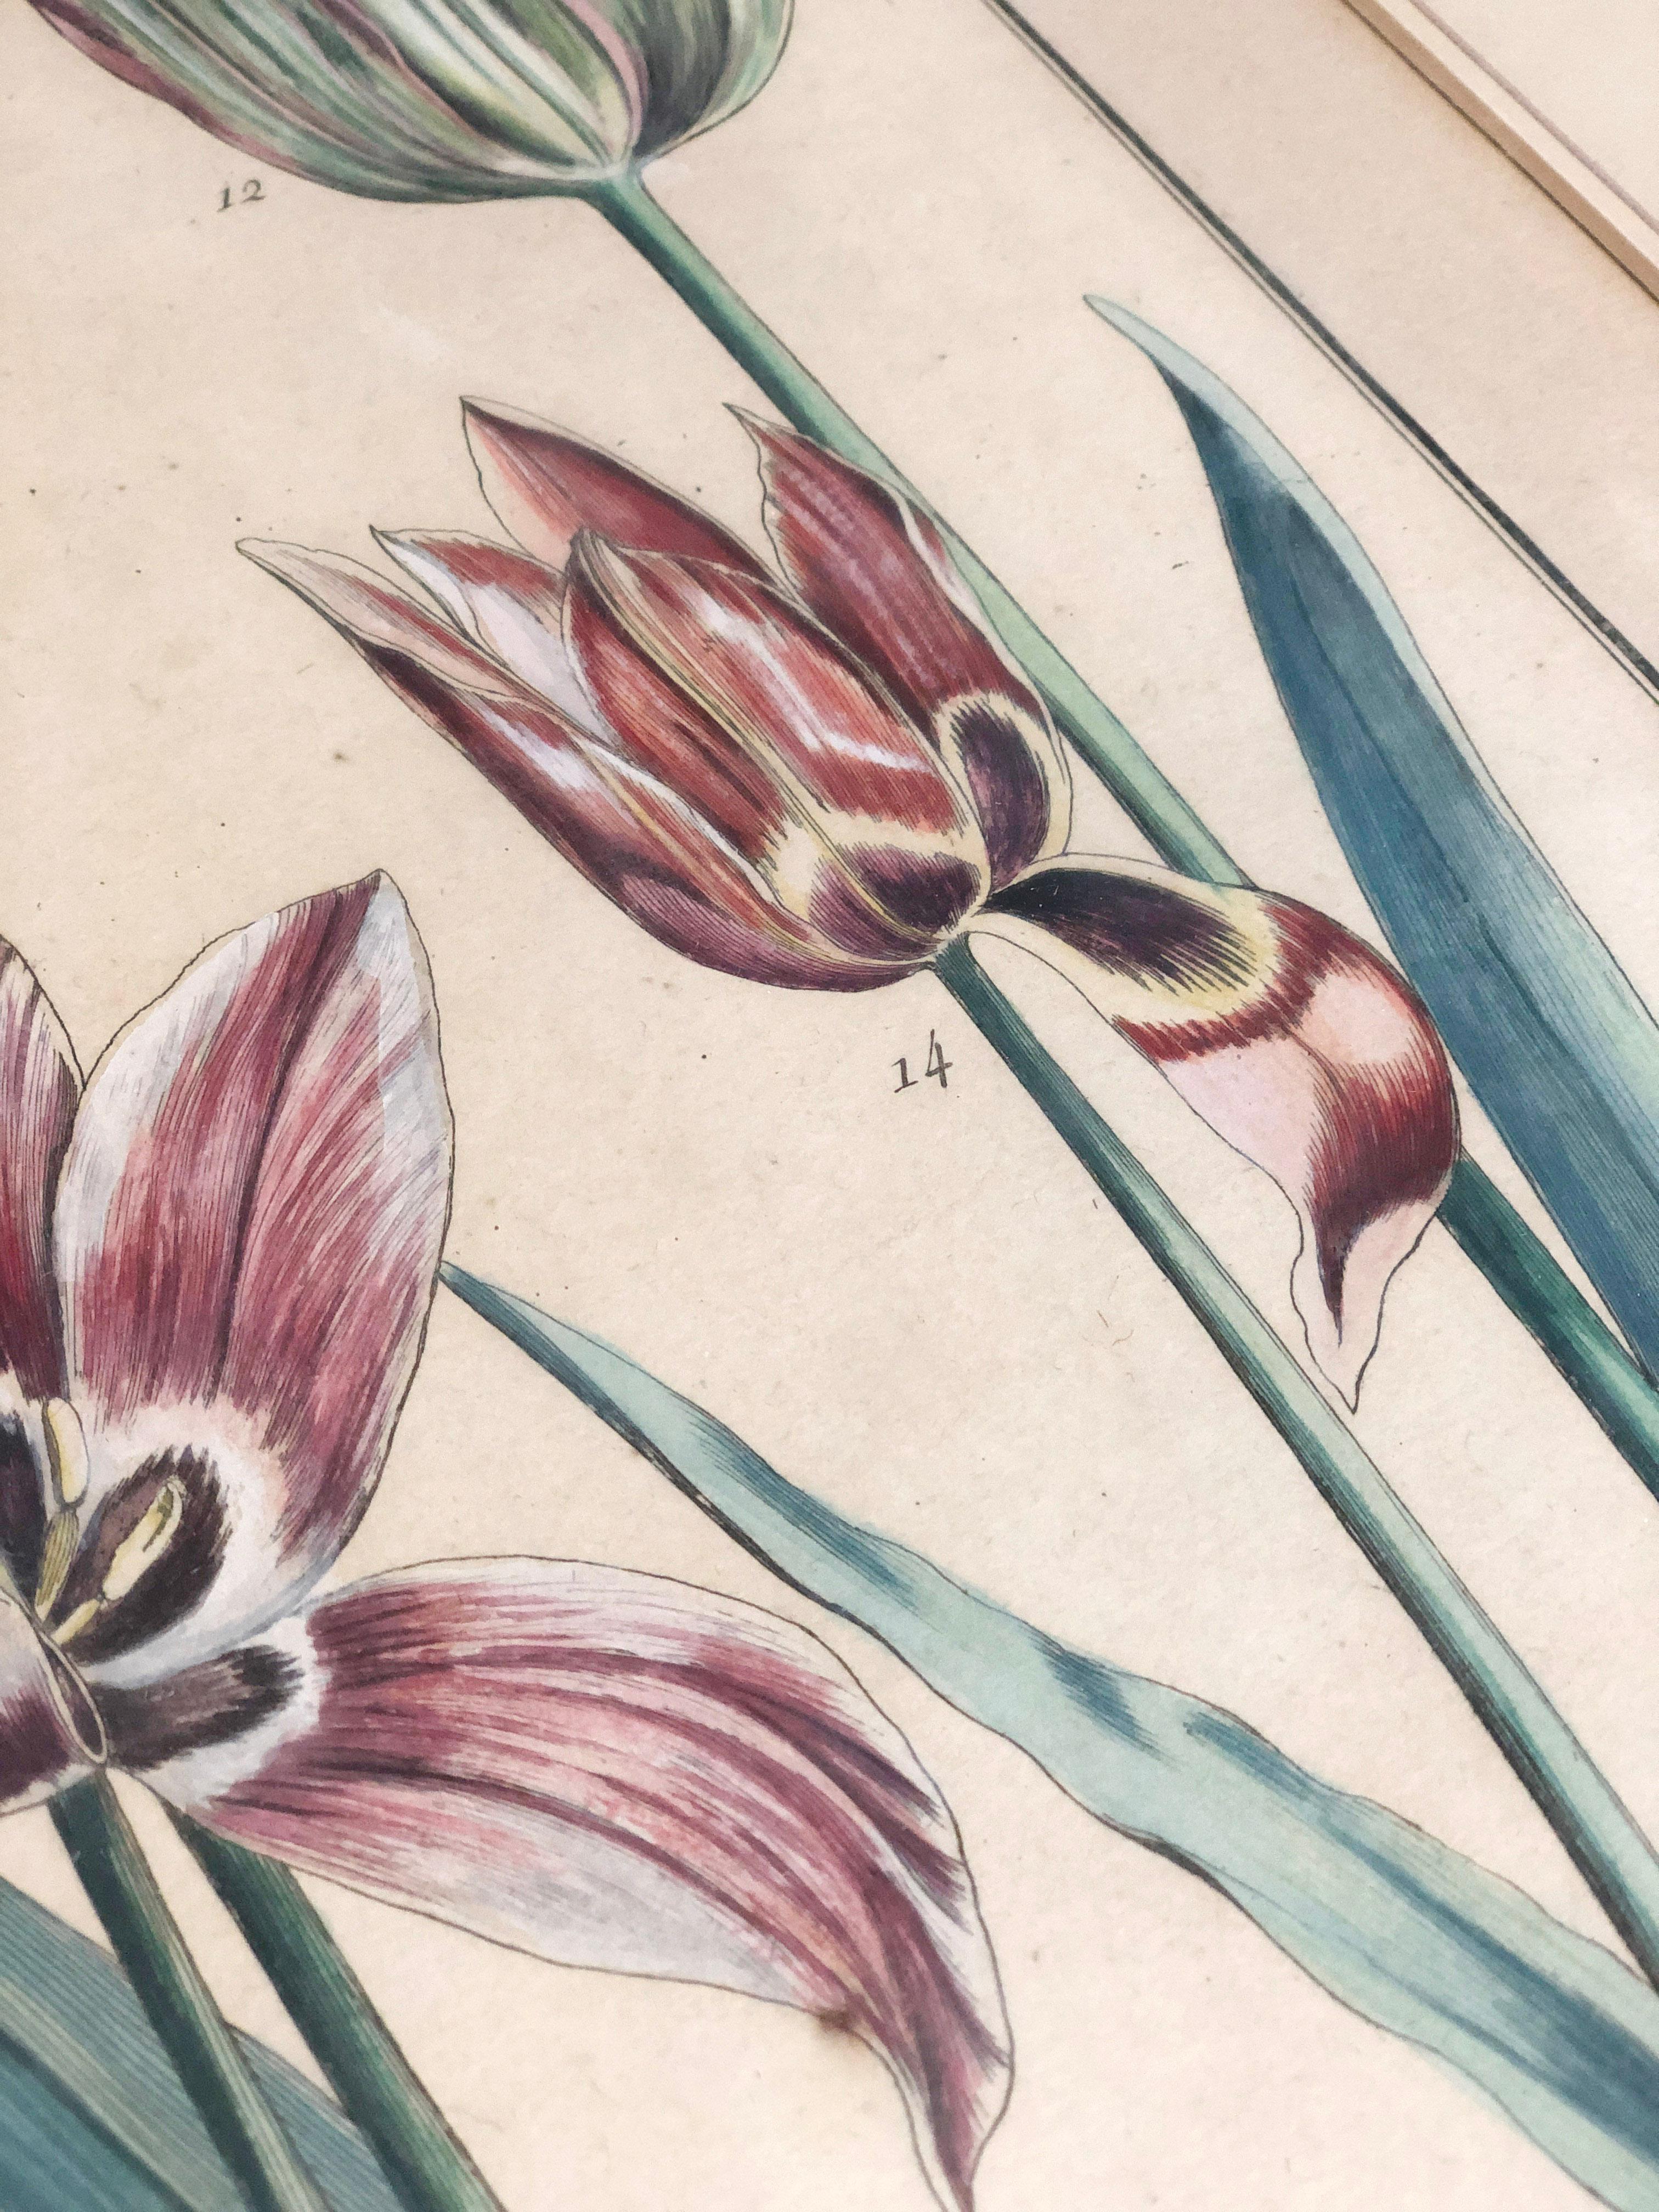 XVIIIe siècle Emanuel Sweert - Maria Merian - Daniel Rabel - gravure sur cuivre 4 tulipes planche 5 en vente